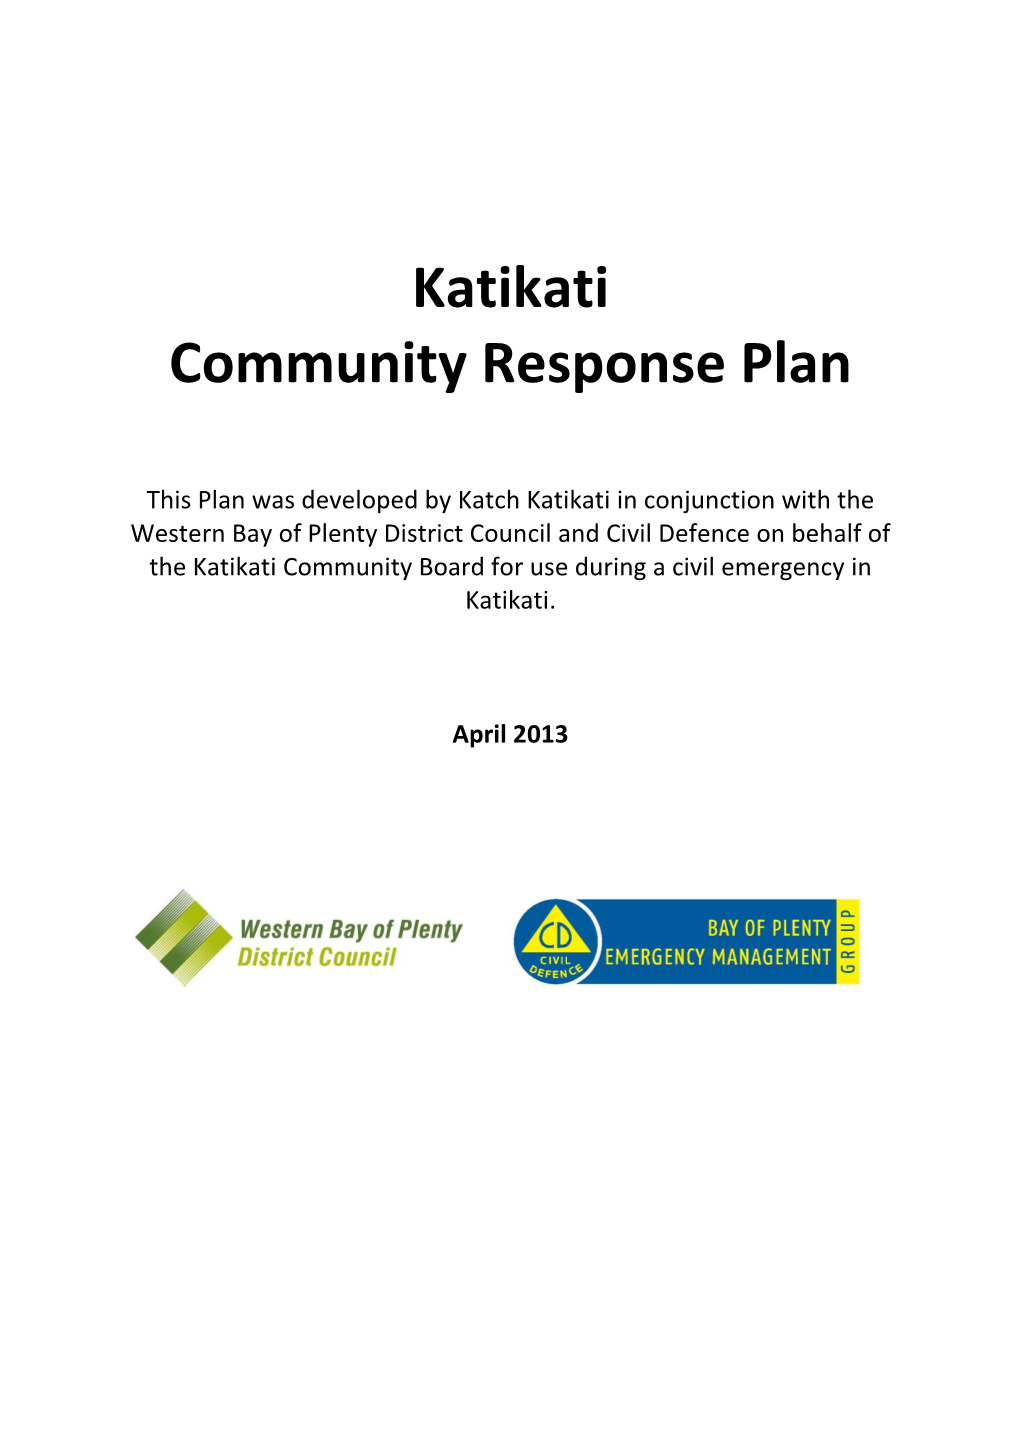 Katikati Community Response Plan